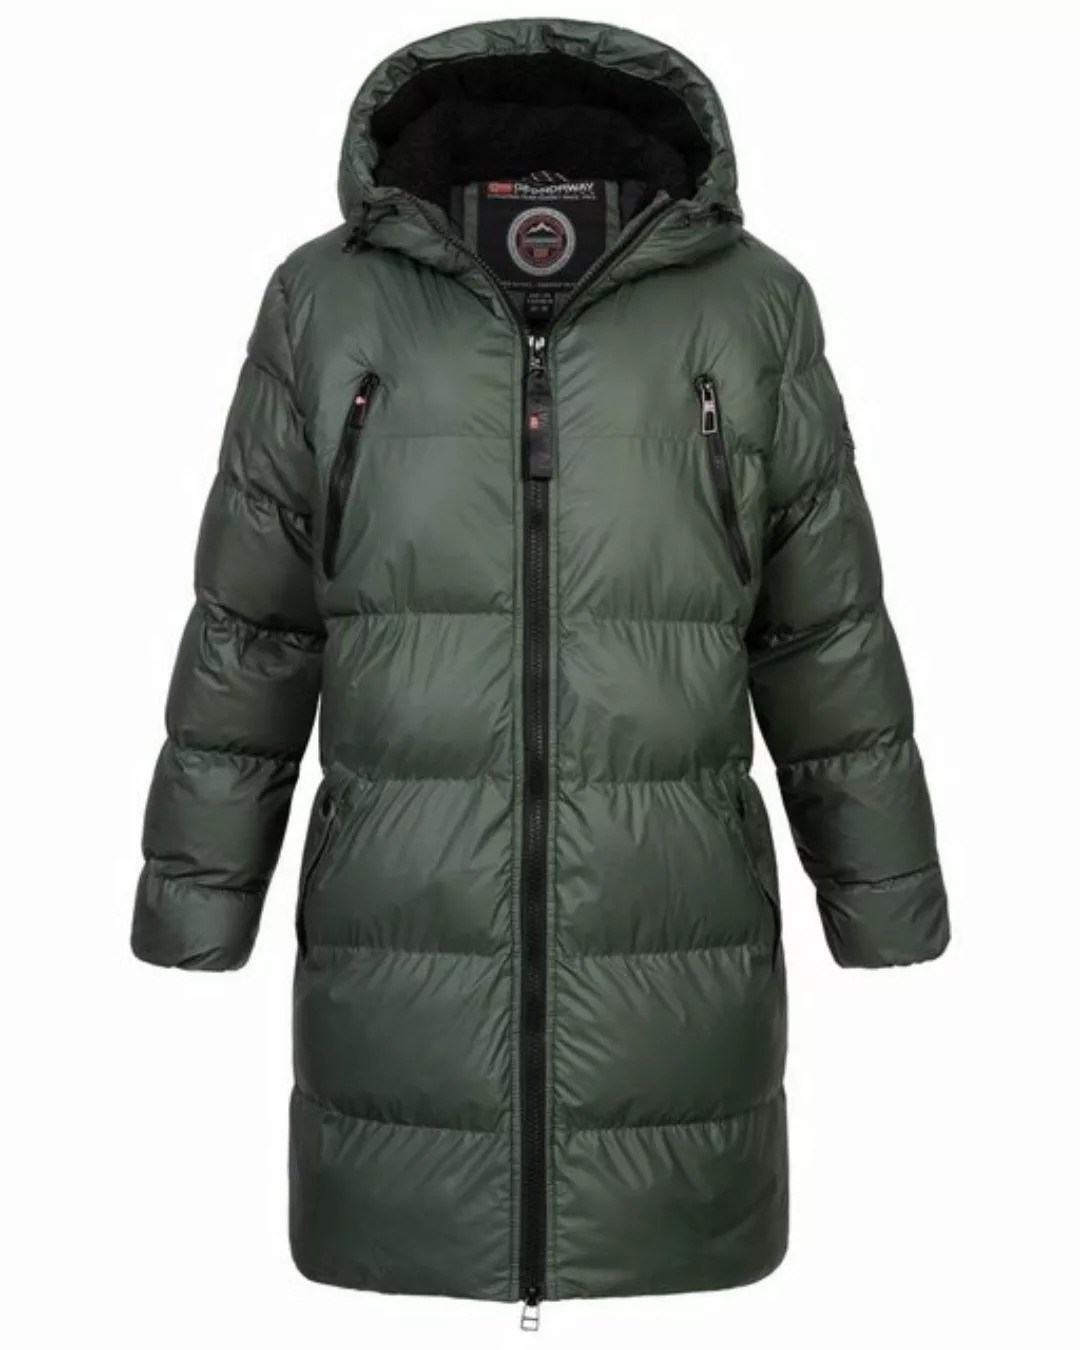 Geographical Norway Steppjacke Damen Winter Jacke Mantel Parka Steppjacke S günstig online kaufen